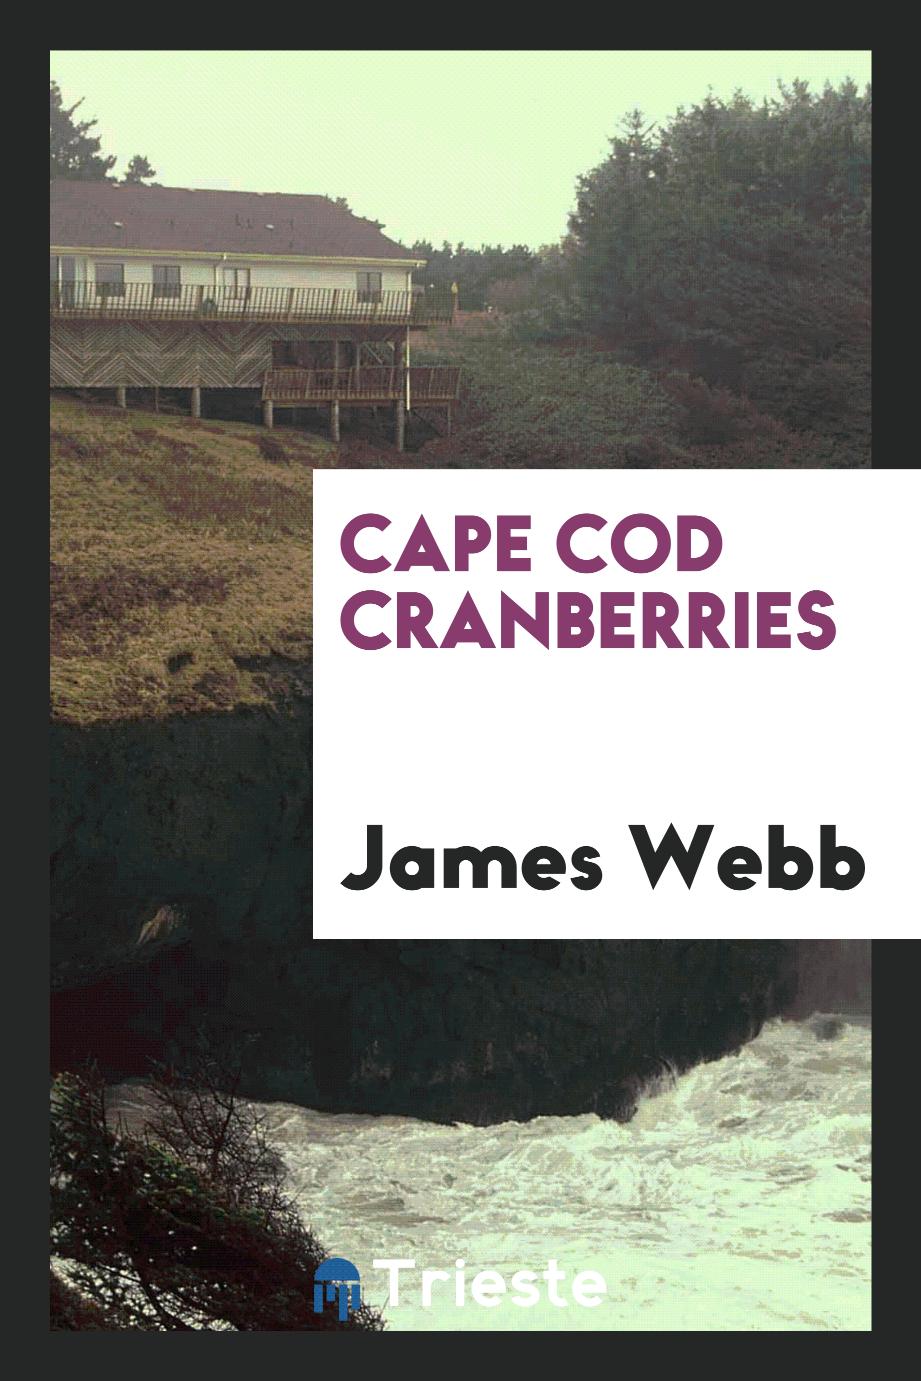 Cape Cod cranberries